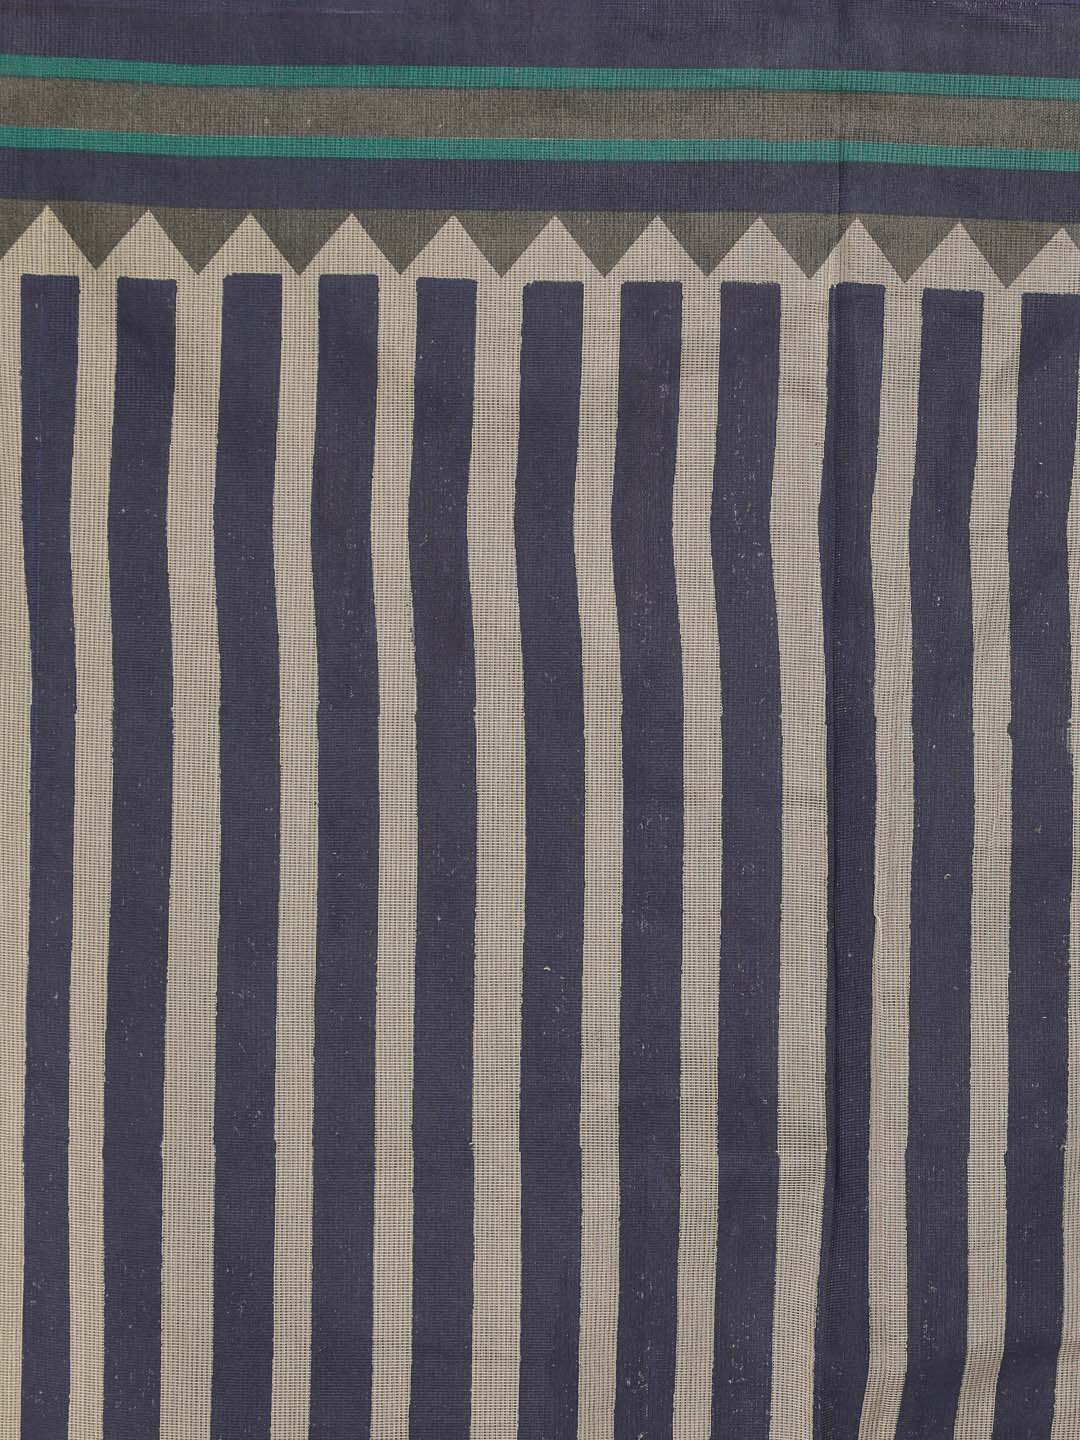 Indethnic Printed Cotton Blend Saree in navy blue - Saree Detail View